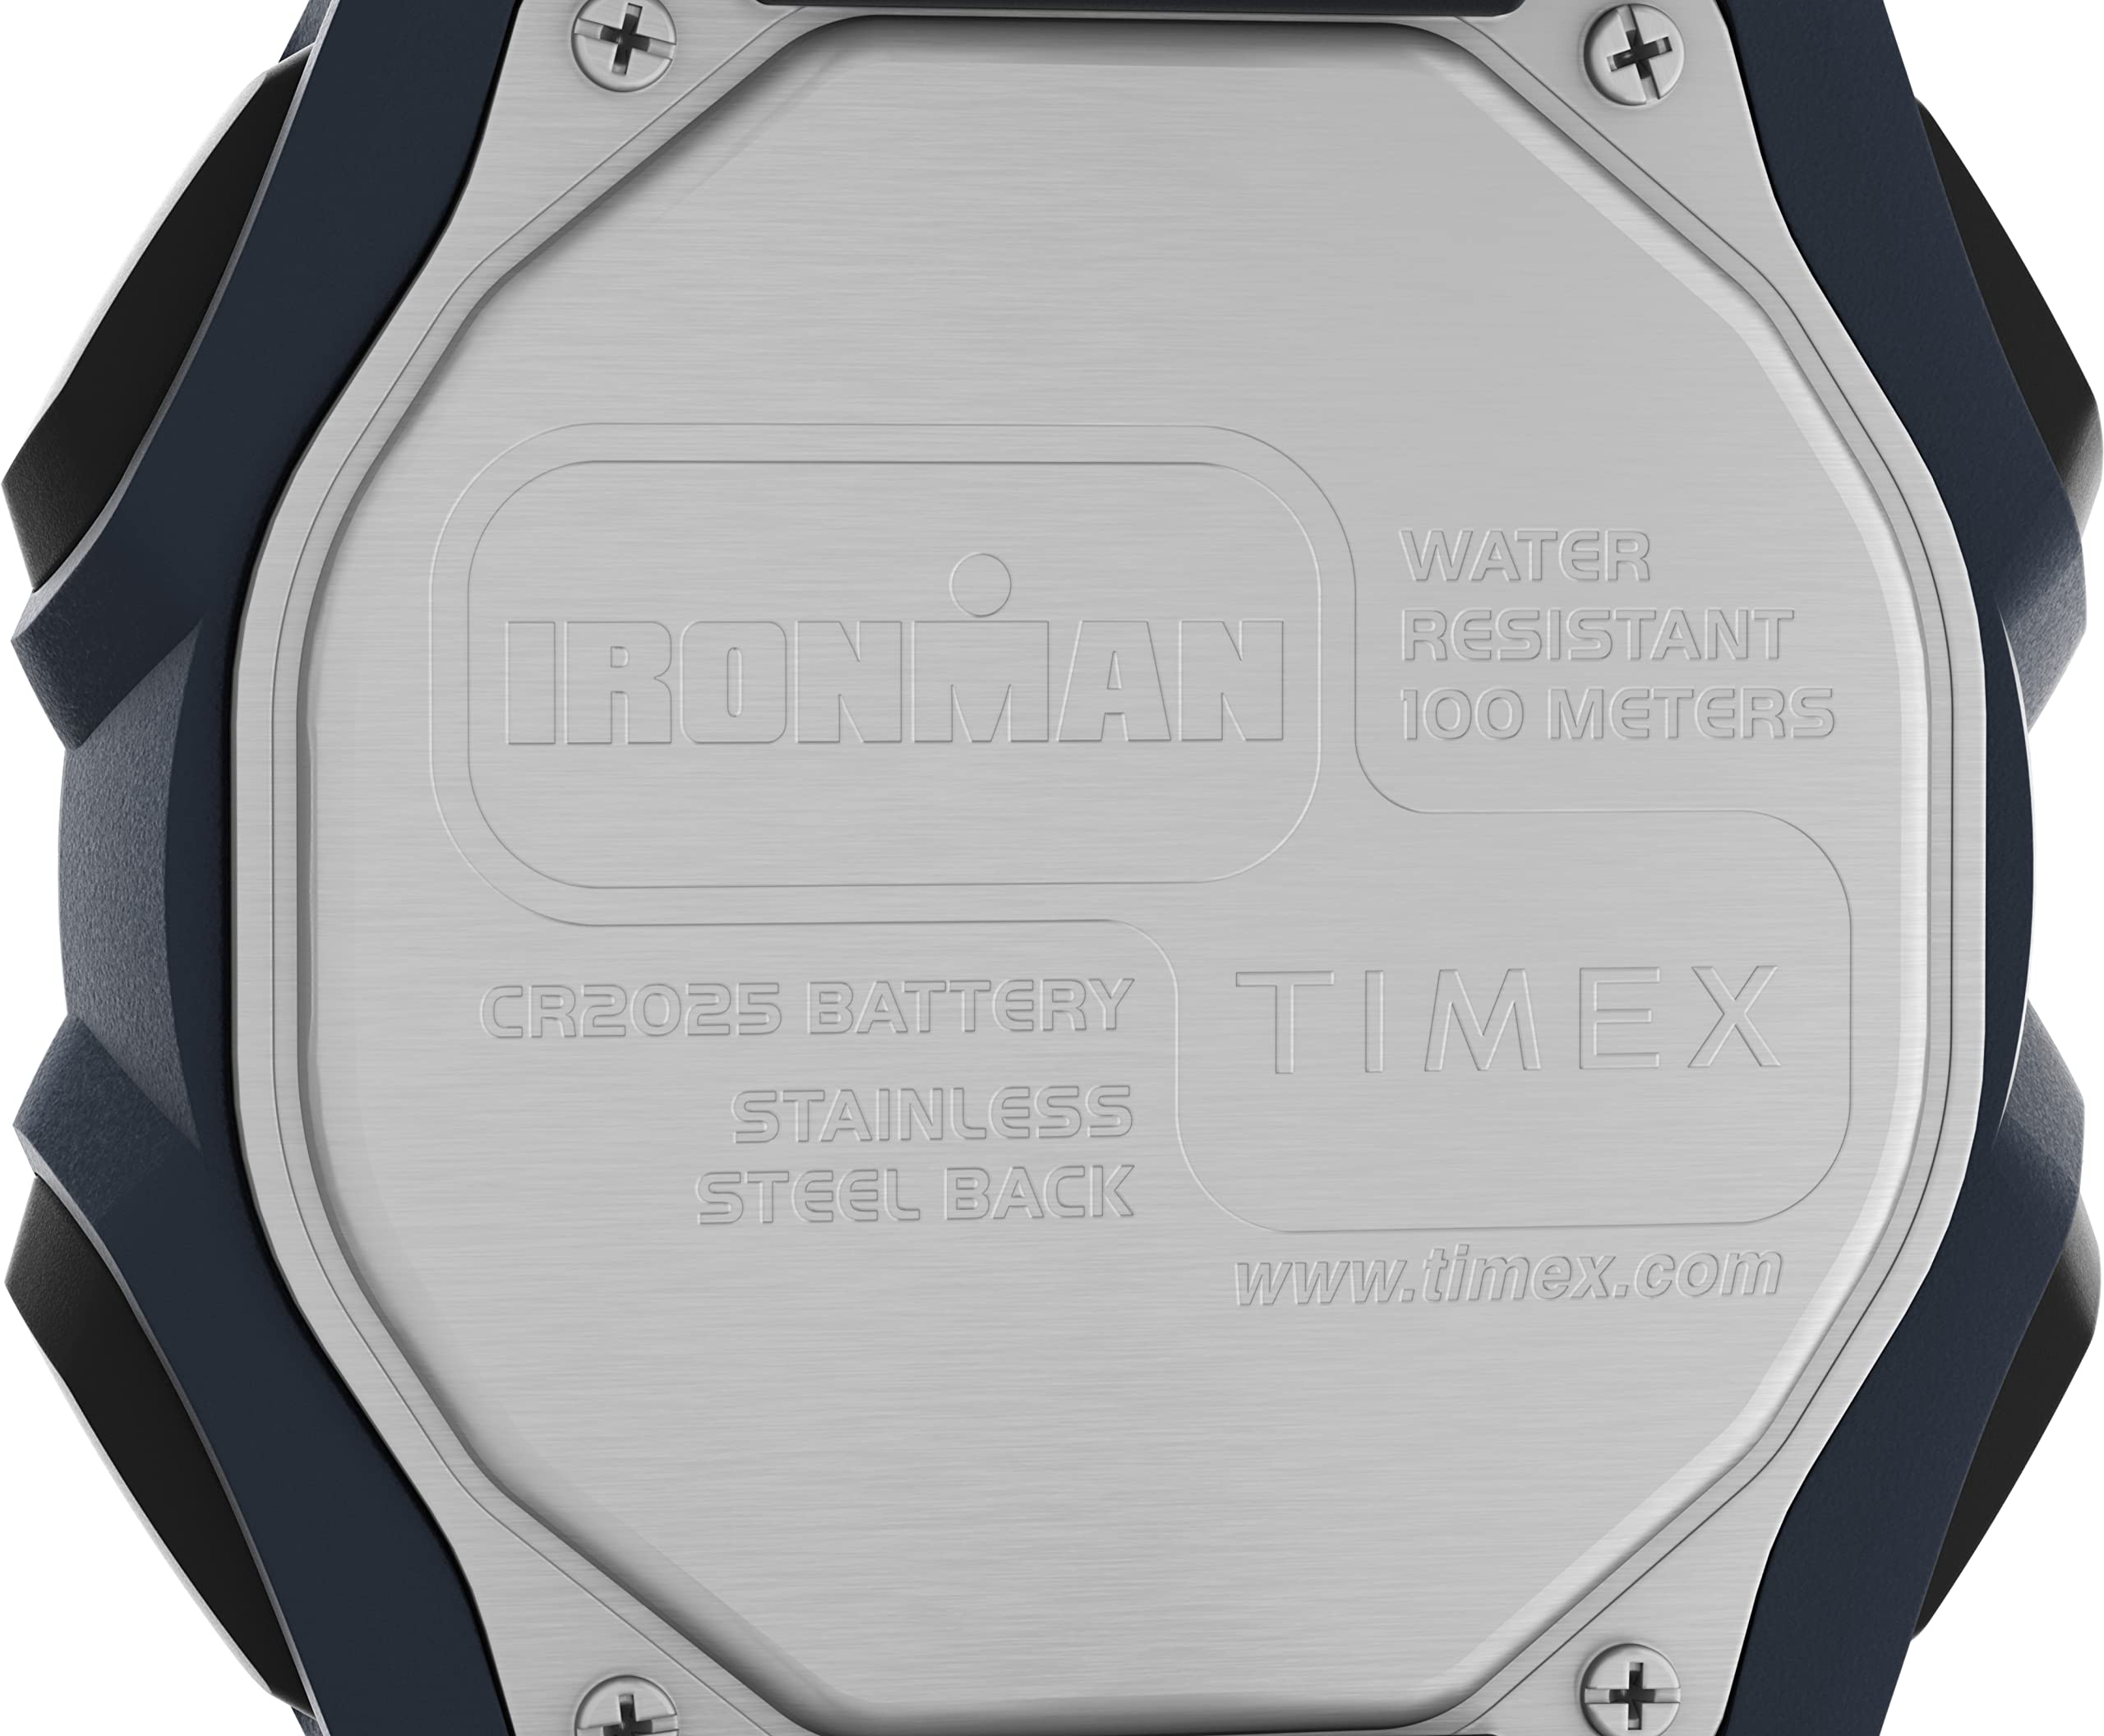 Timex Men's Ironman Classic C30 Quartz Watch